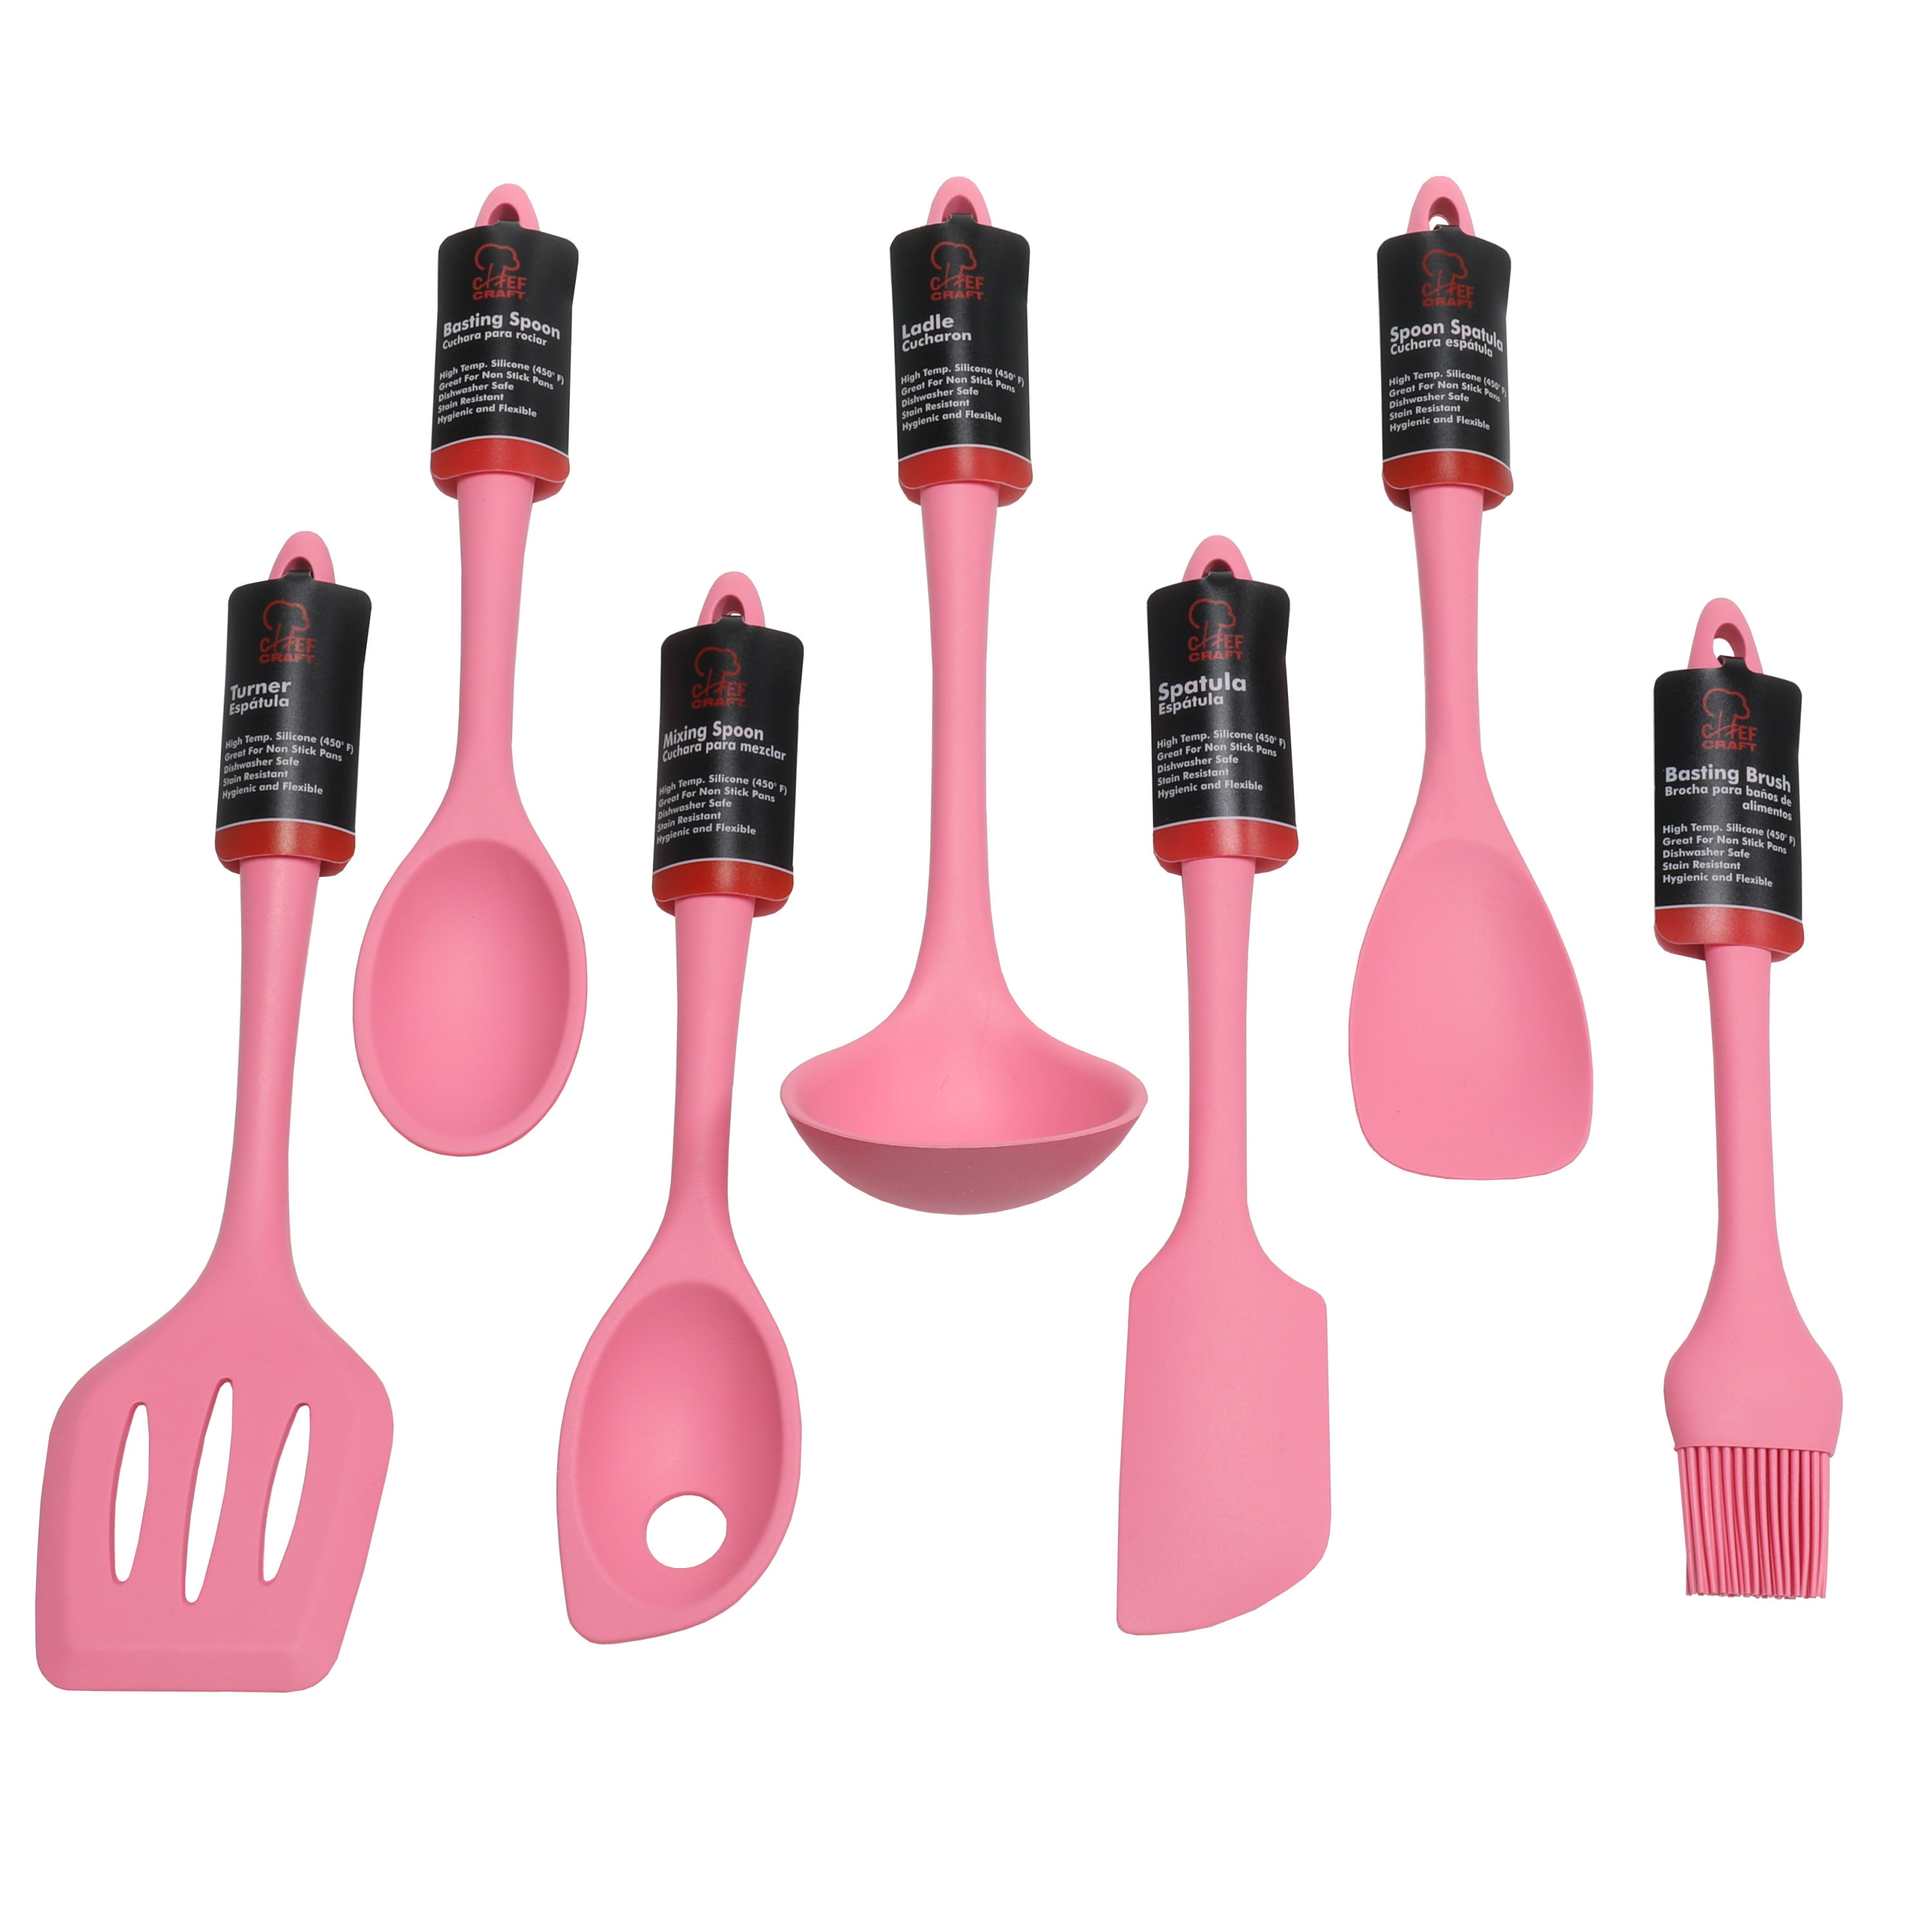 Kitchenaid 4-Piece Plastic Kitchen Utensil Set Includes Spoon, Turner,  Pasta Fork, and Spatula - Walmart.com